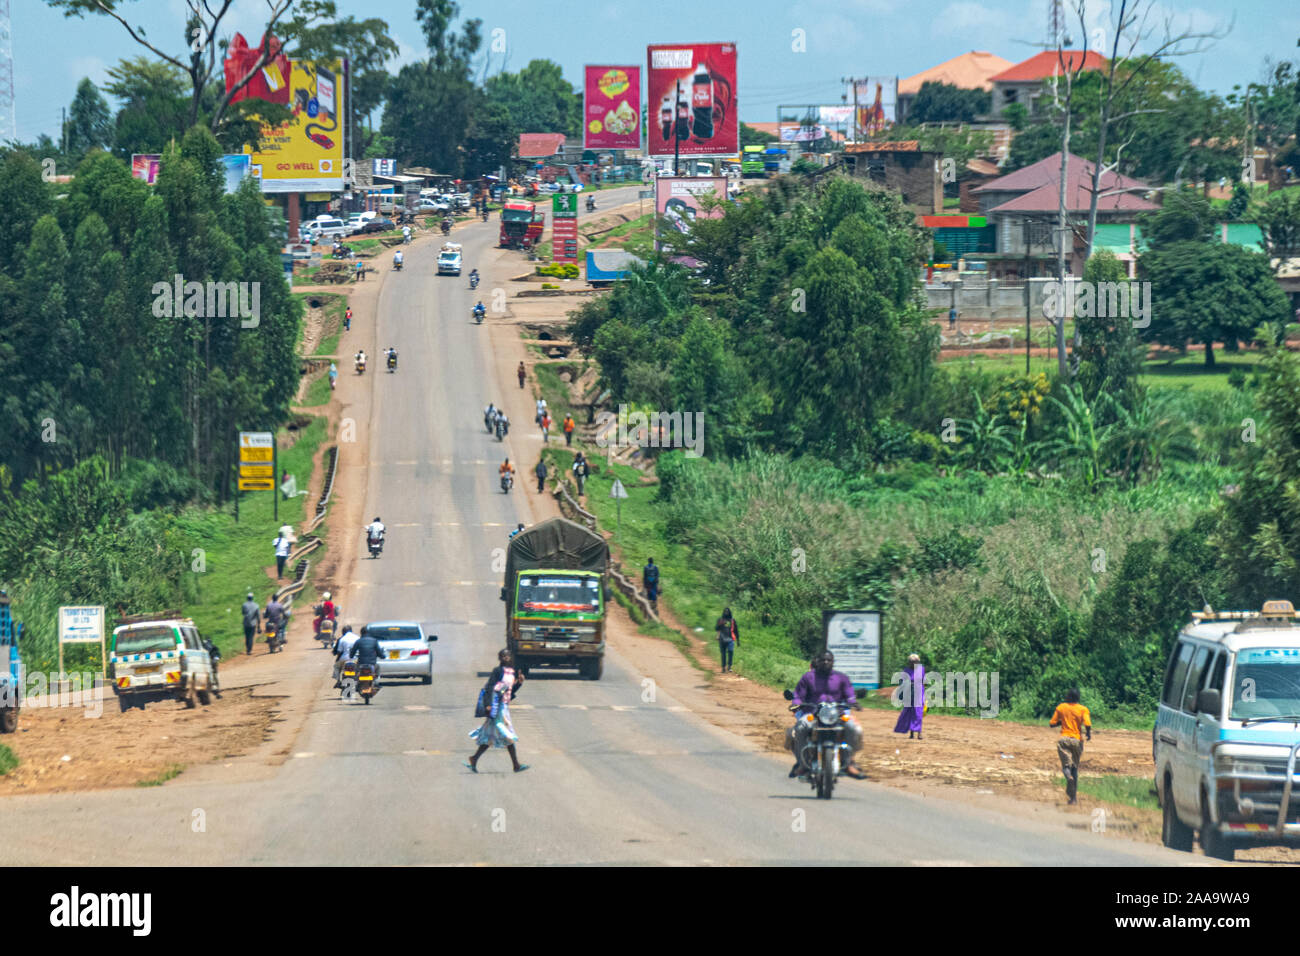 La strada per Iganga, Jinja, Regione orientale dell'Uganda Foto Stock